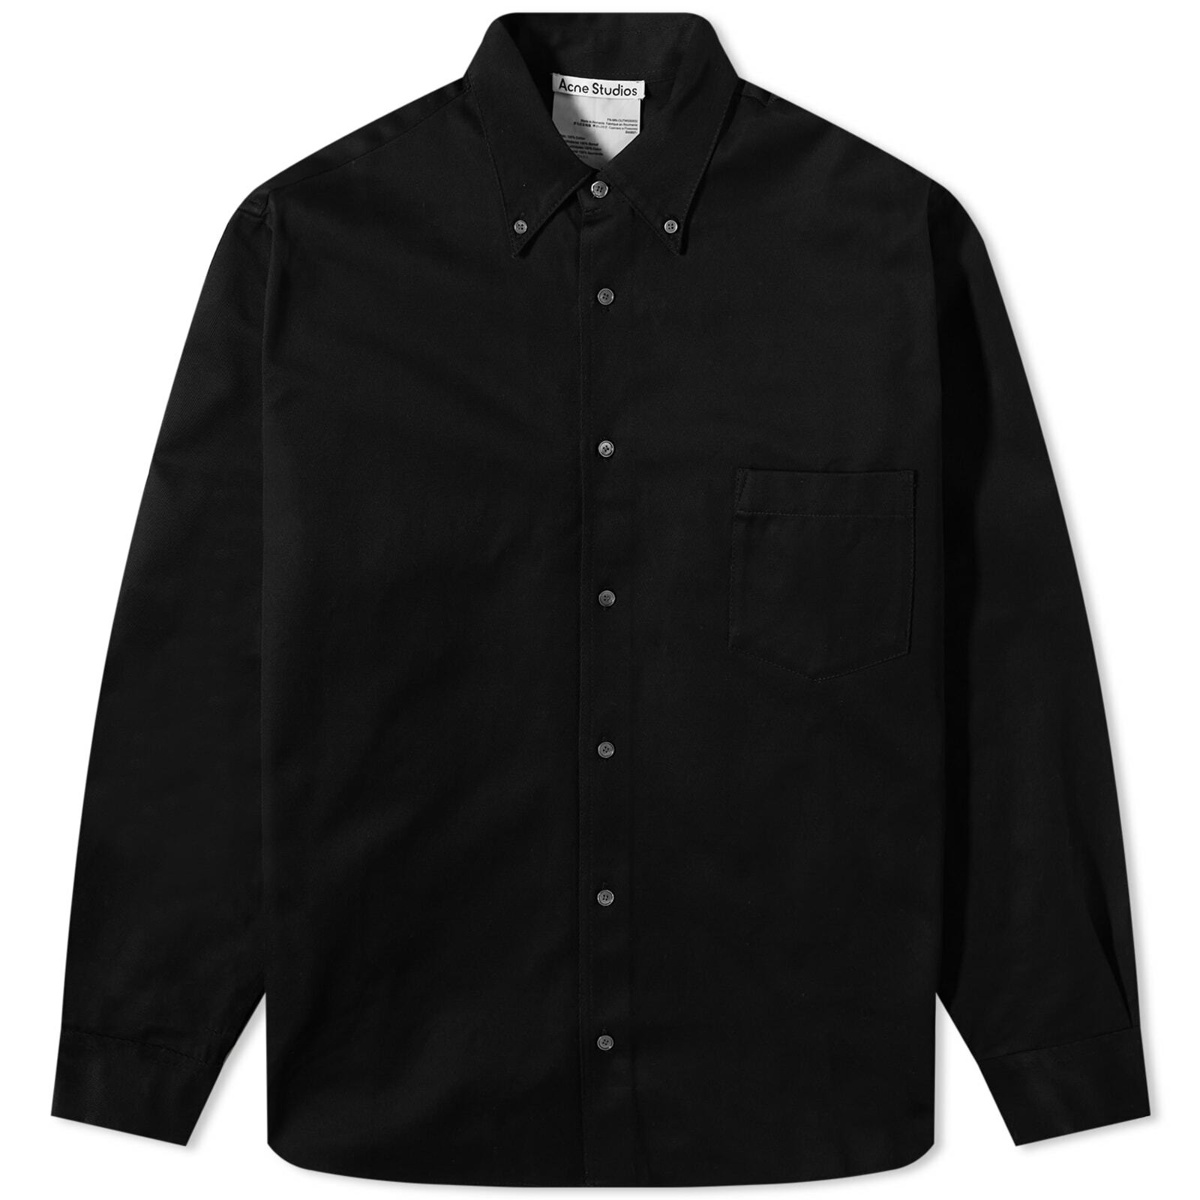 Acne Studios Men's Odrox Cotton Twill Overshirt in Black